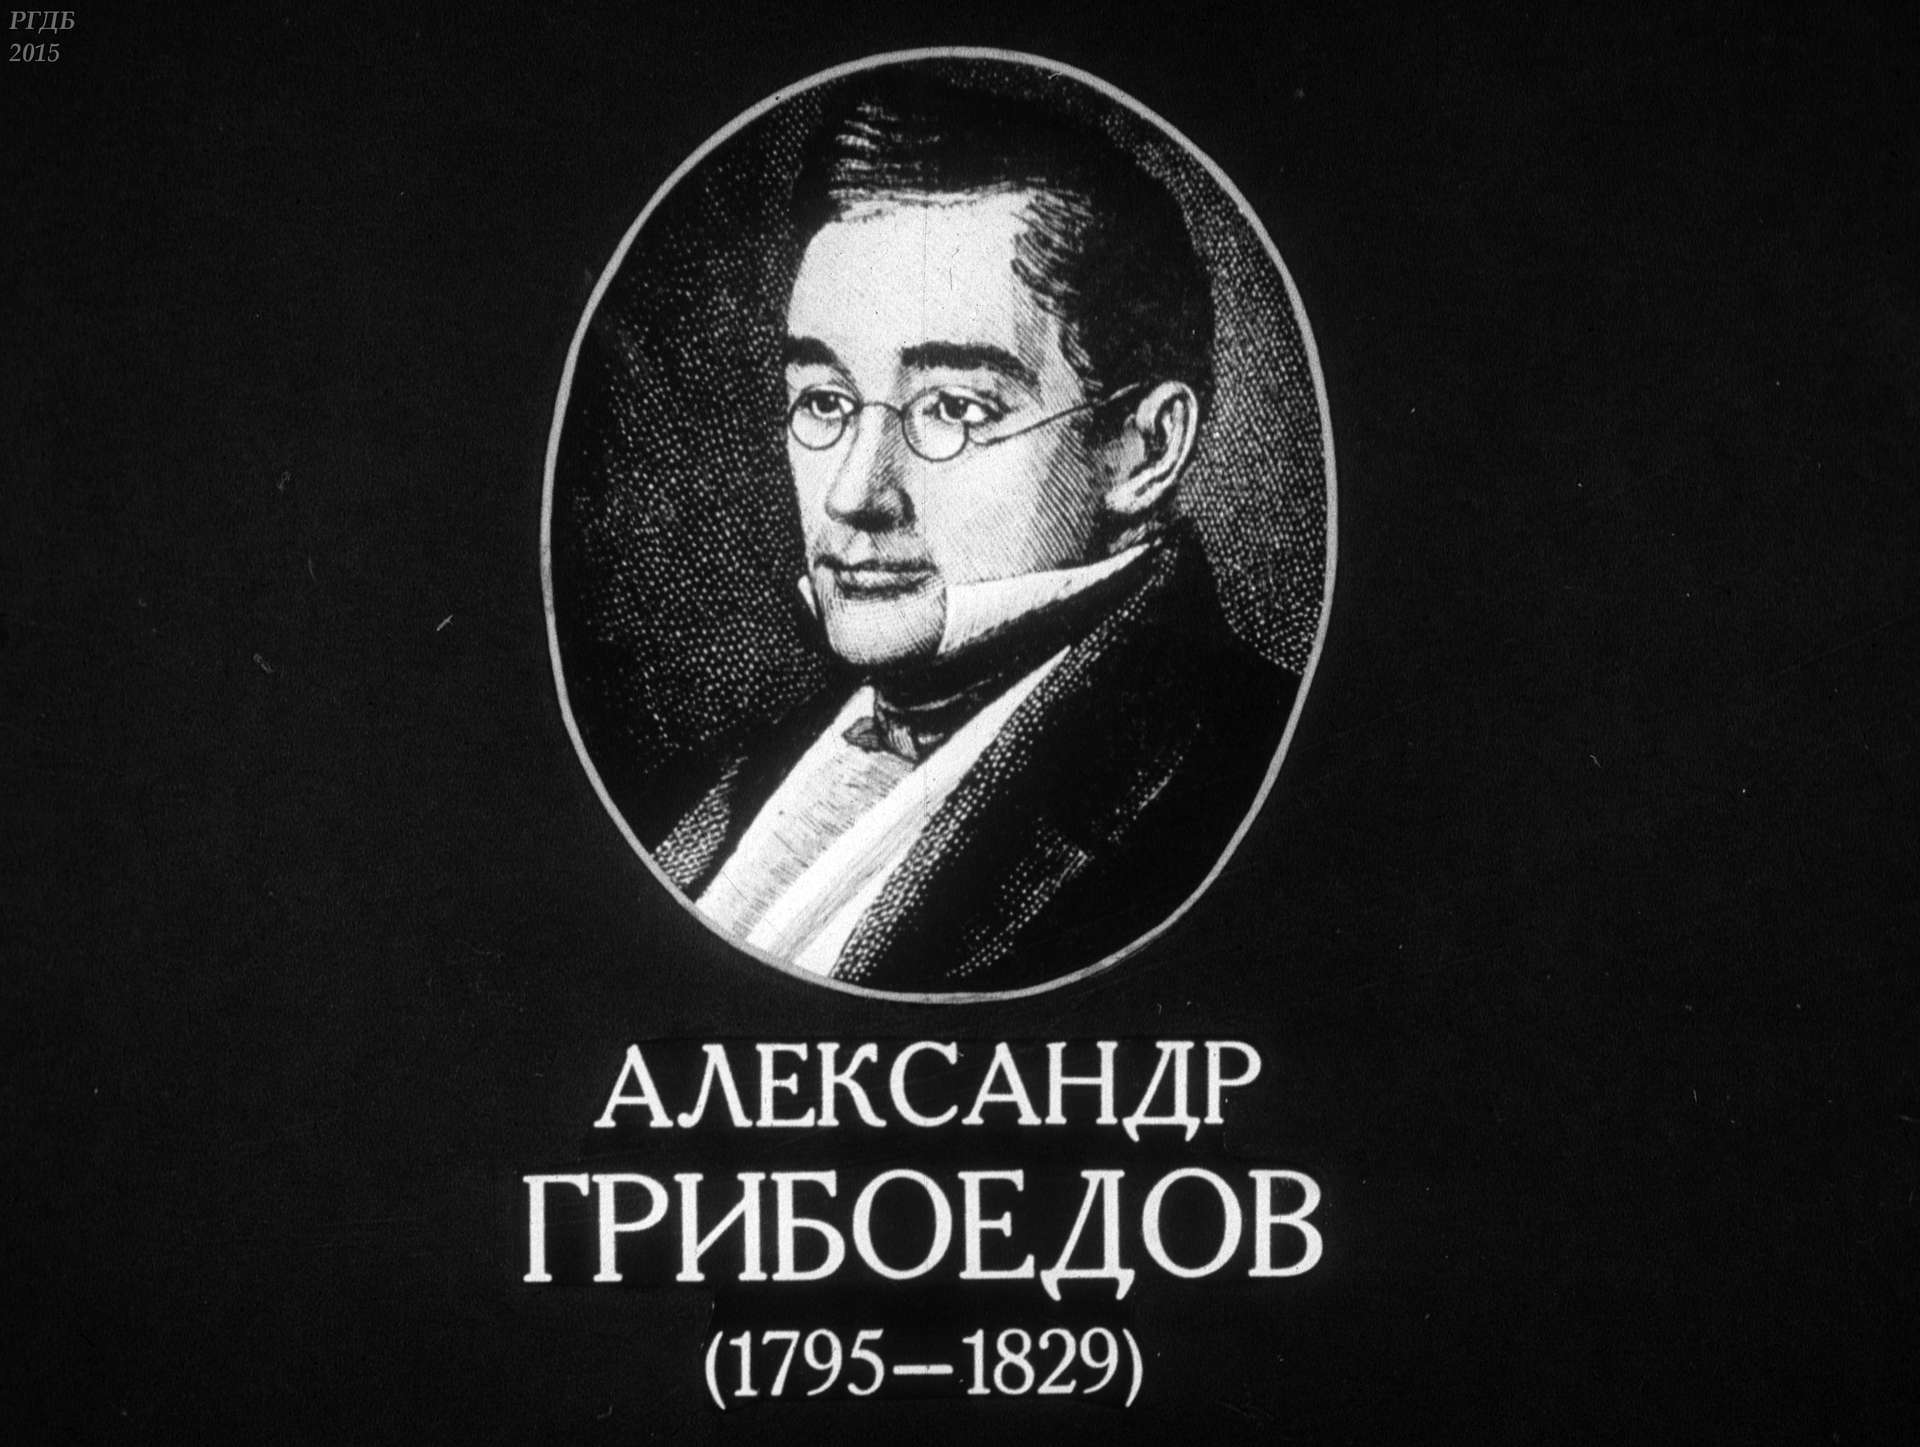 Гротская З. - Александр Грибоедов (1795-1829) - 1985